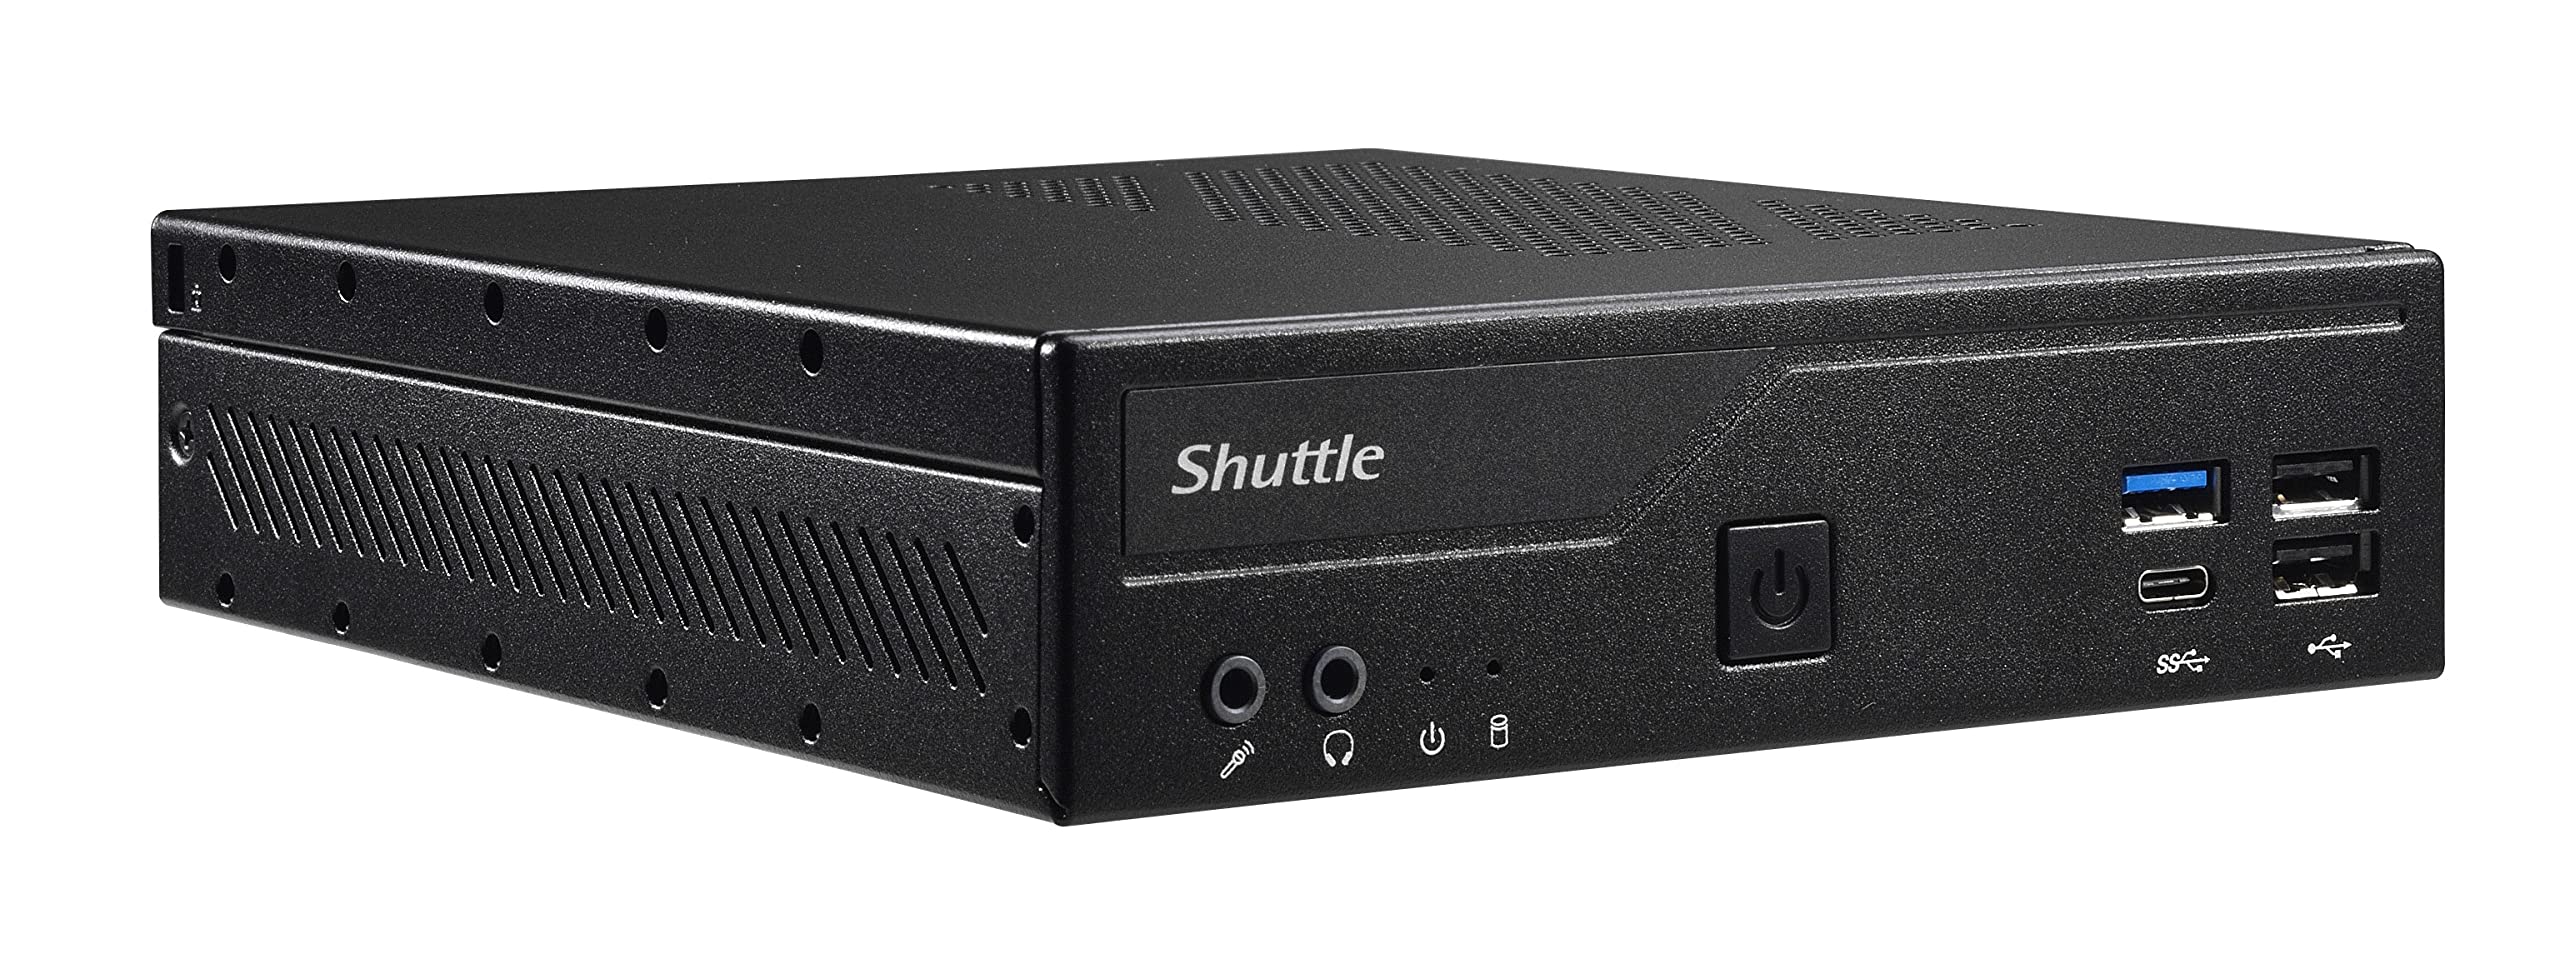 Shuttle XPC Slim DH610 Mini Barebone PC Intel H610 Support 65W Cometlake CPU No Ram No HDD/SSD No CPU No OS - Click Image to Close